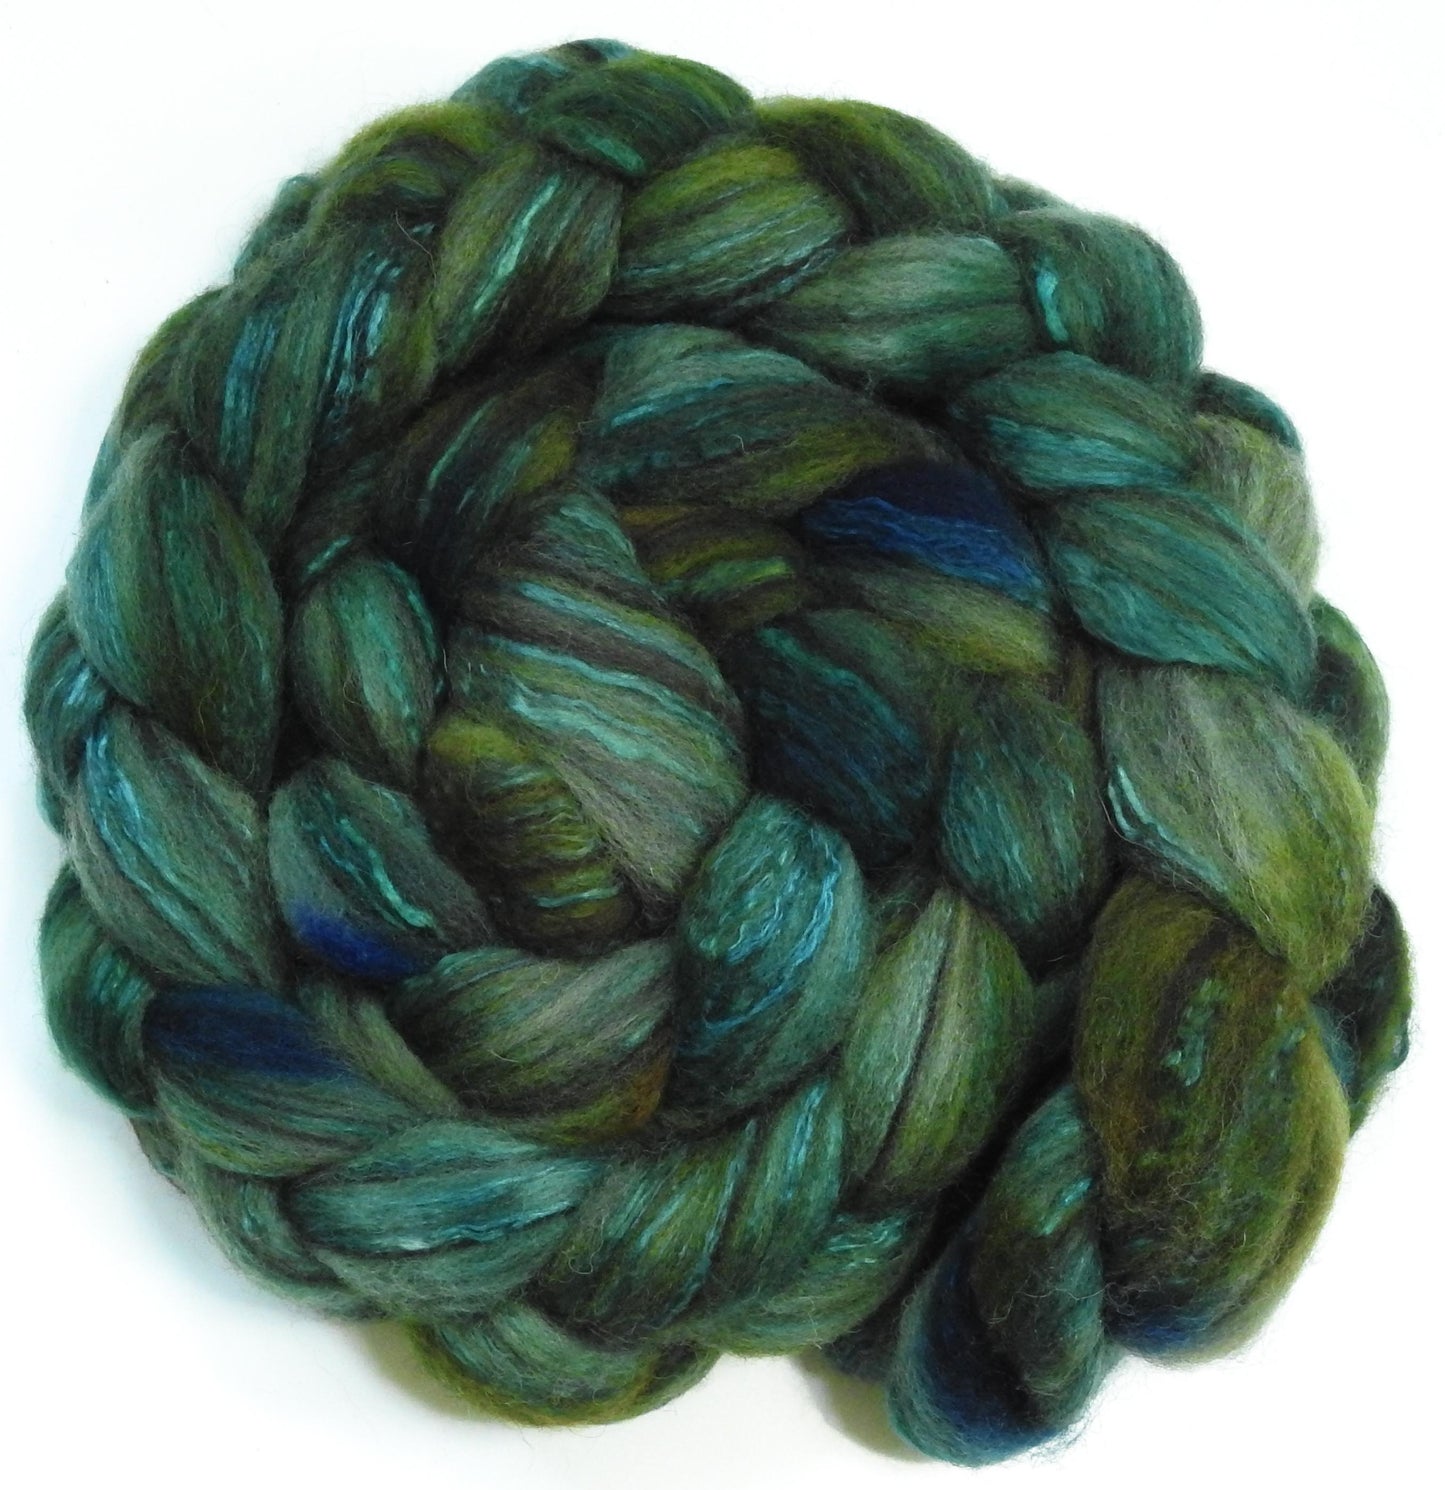 Courgette (6.1 oz) - Humbug Shetland/ Mulberry Silk (75/25)